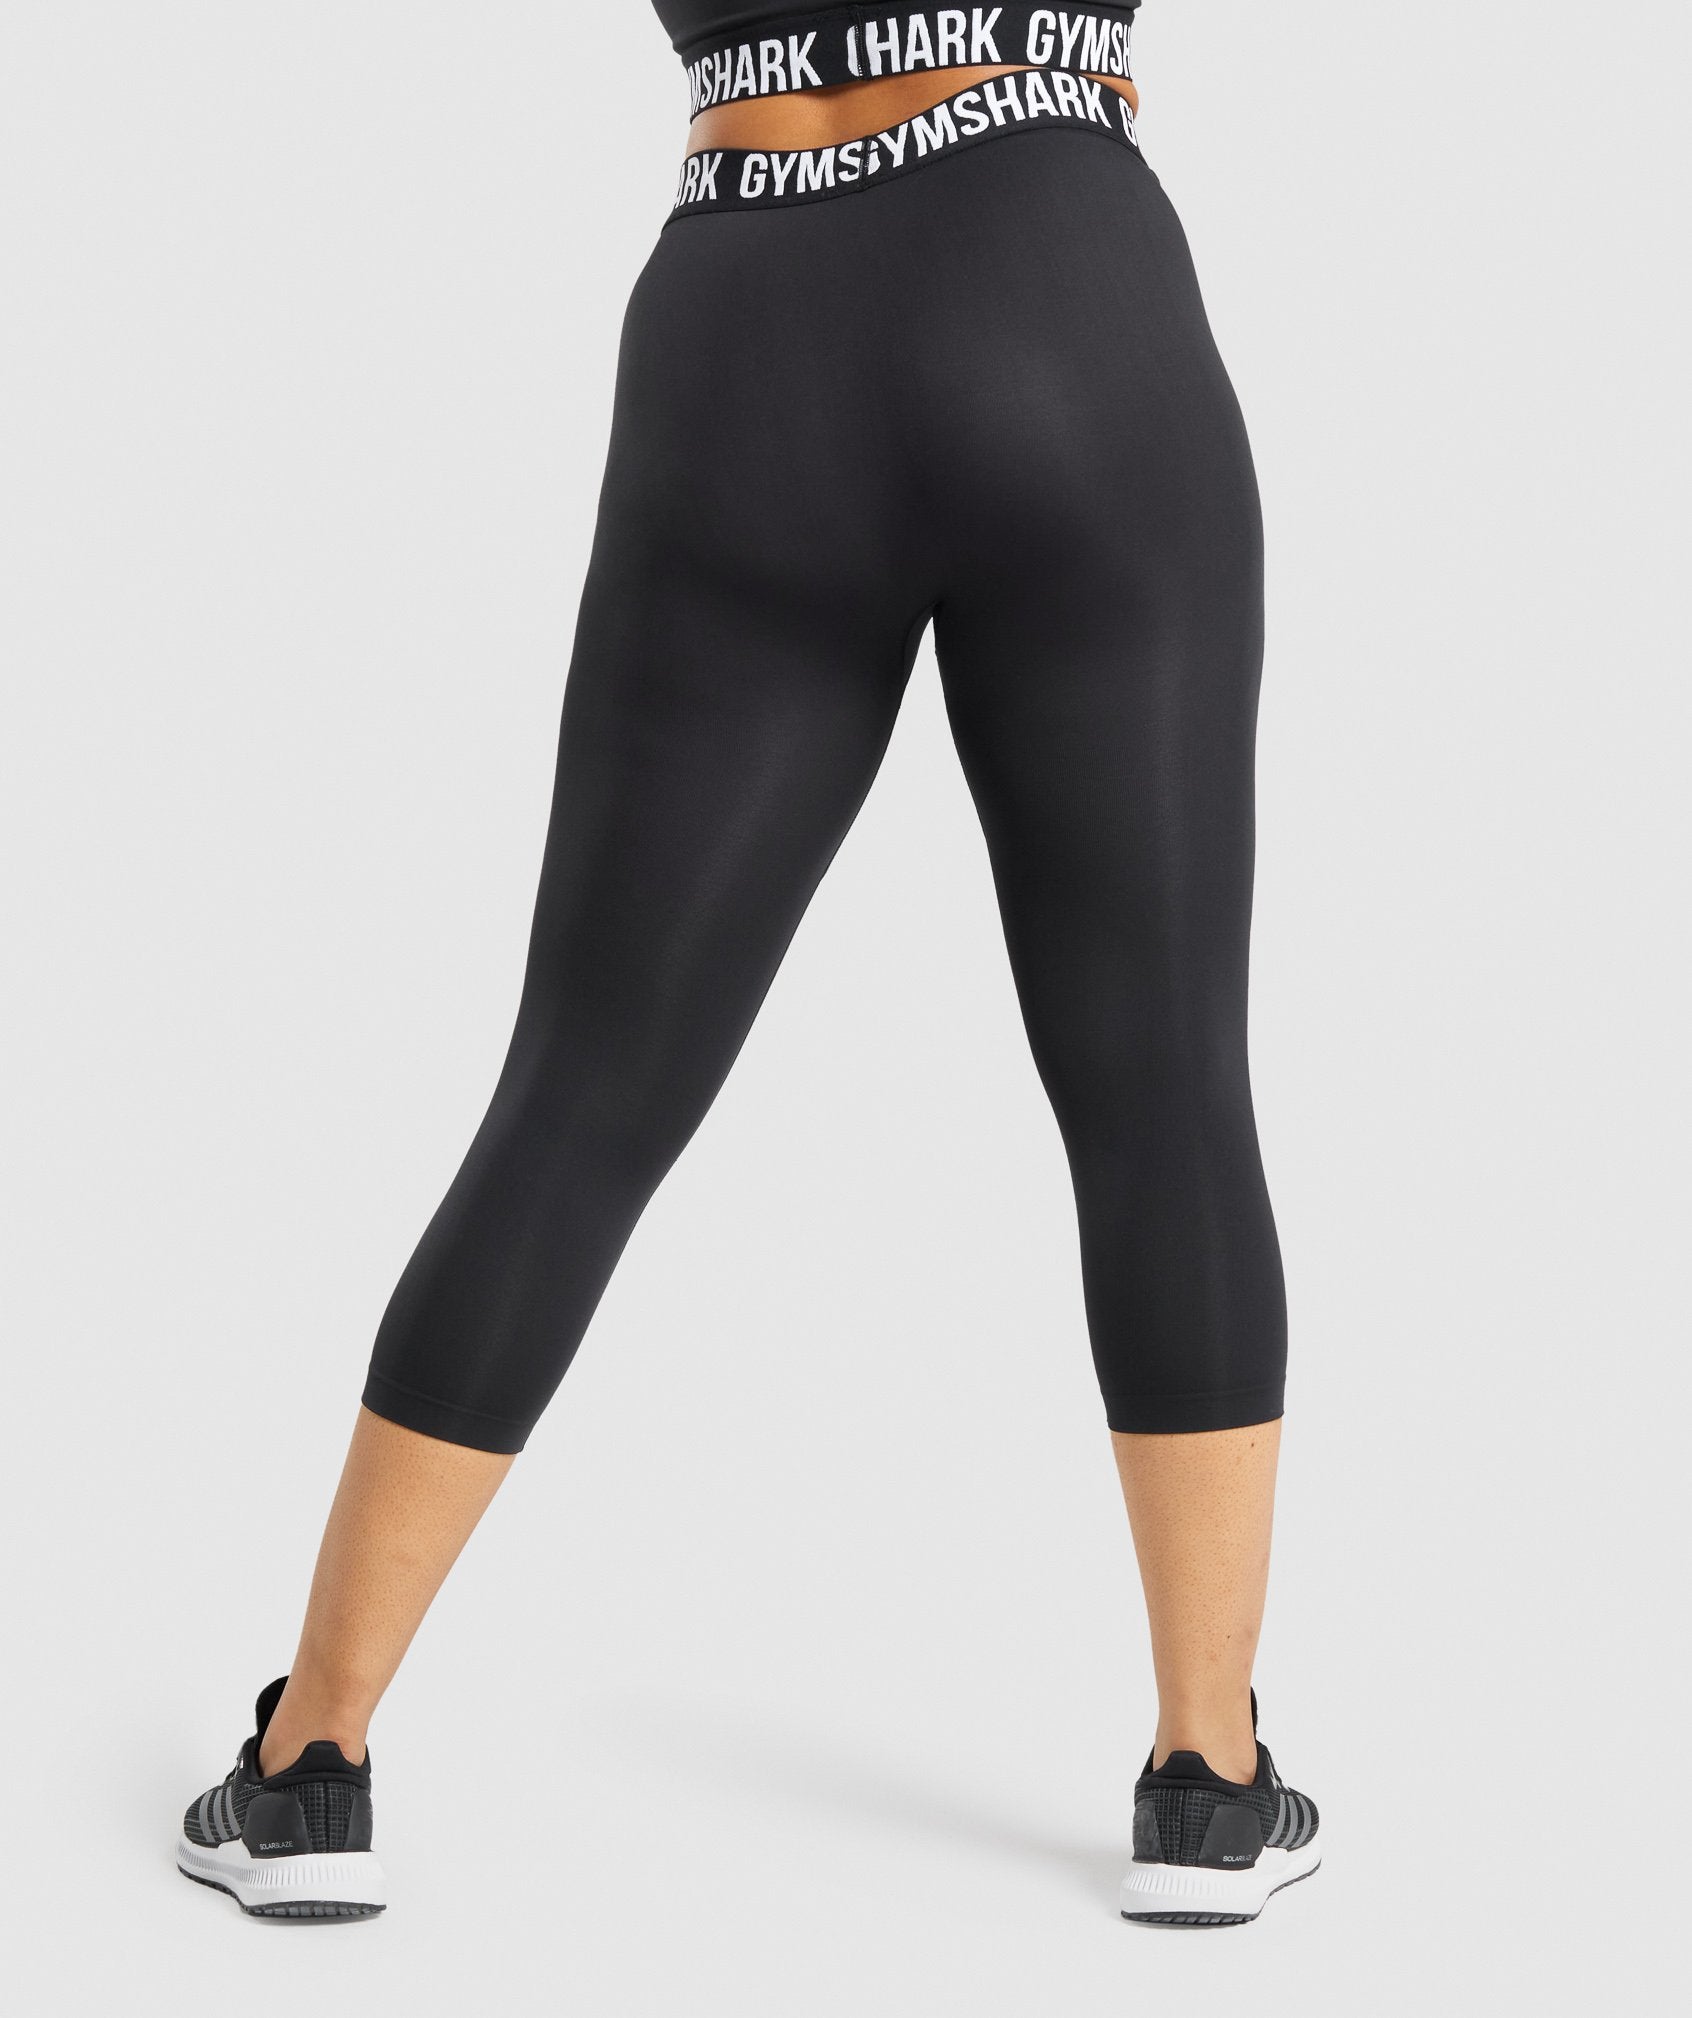 Gymshark seamless cropped leggings (XL)